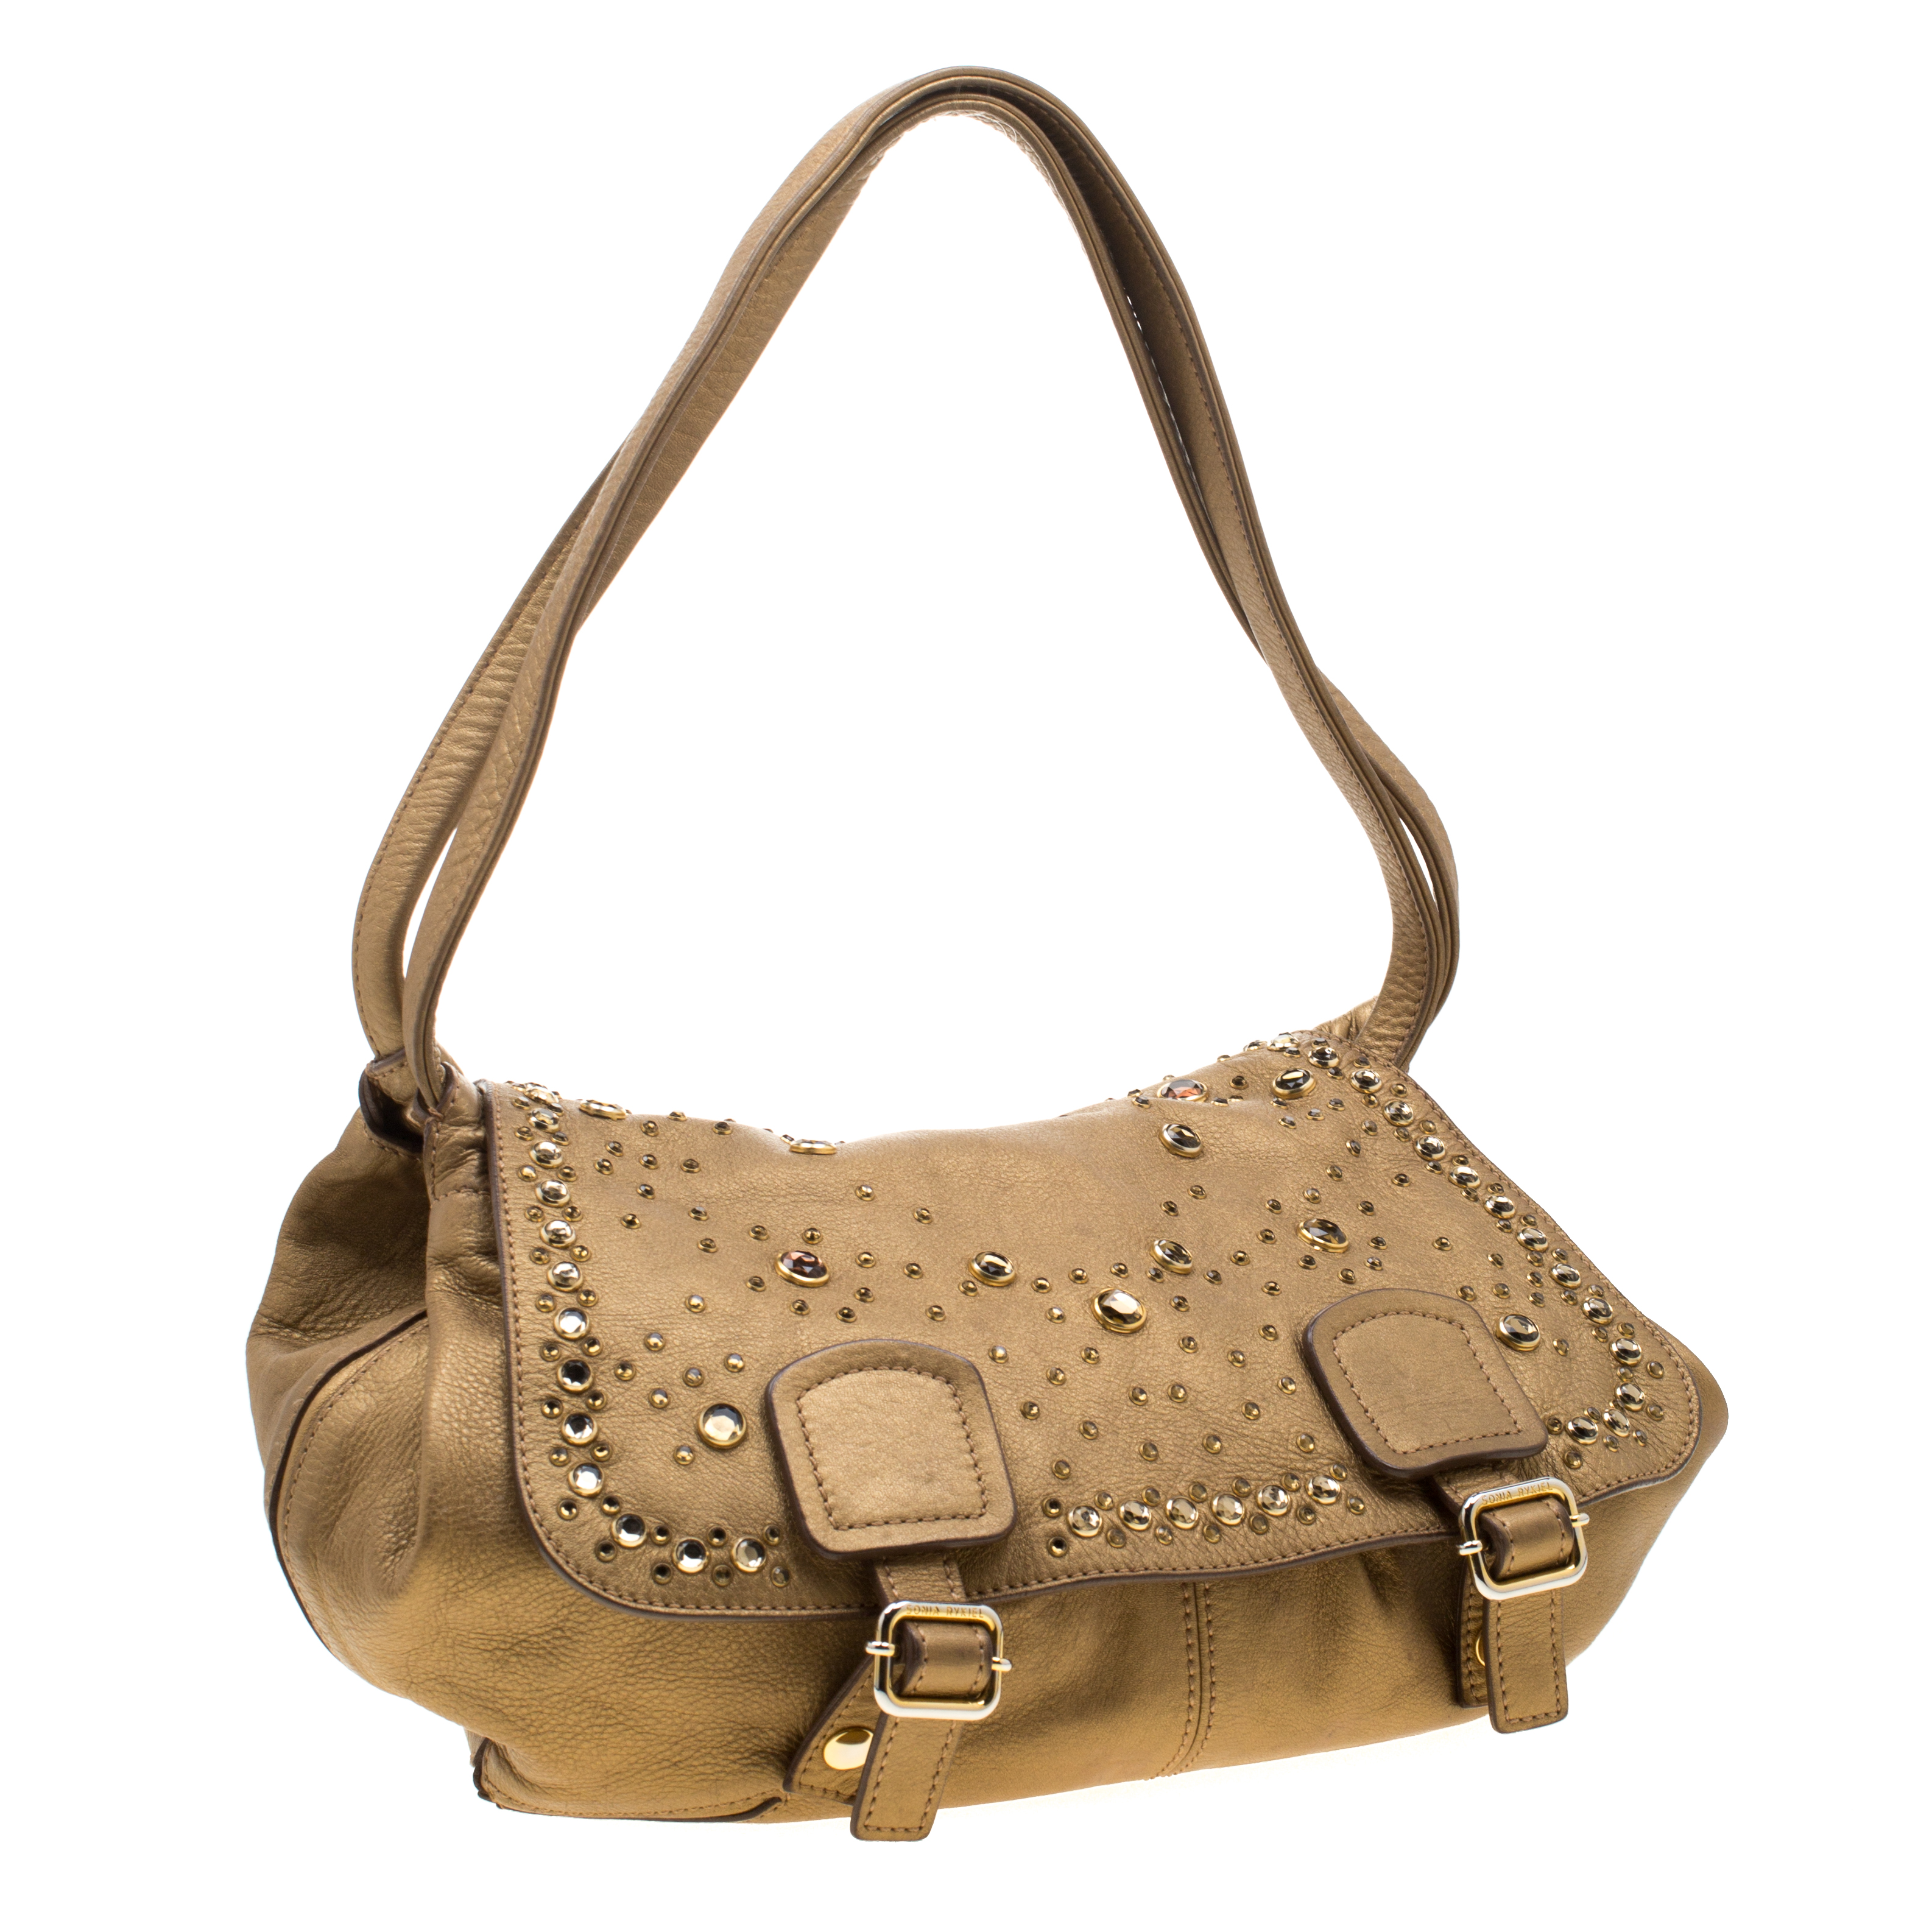 Sonia Rykiel Metallic Gold Leather Studded Shoulder Bag